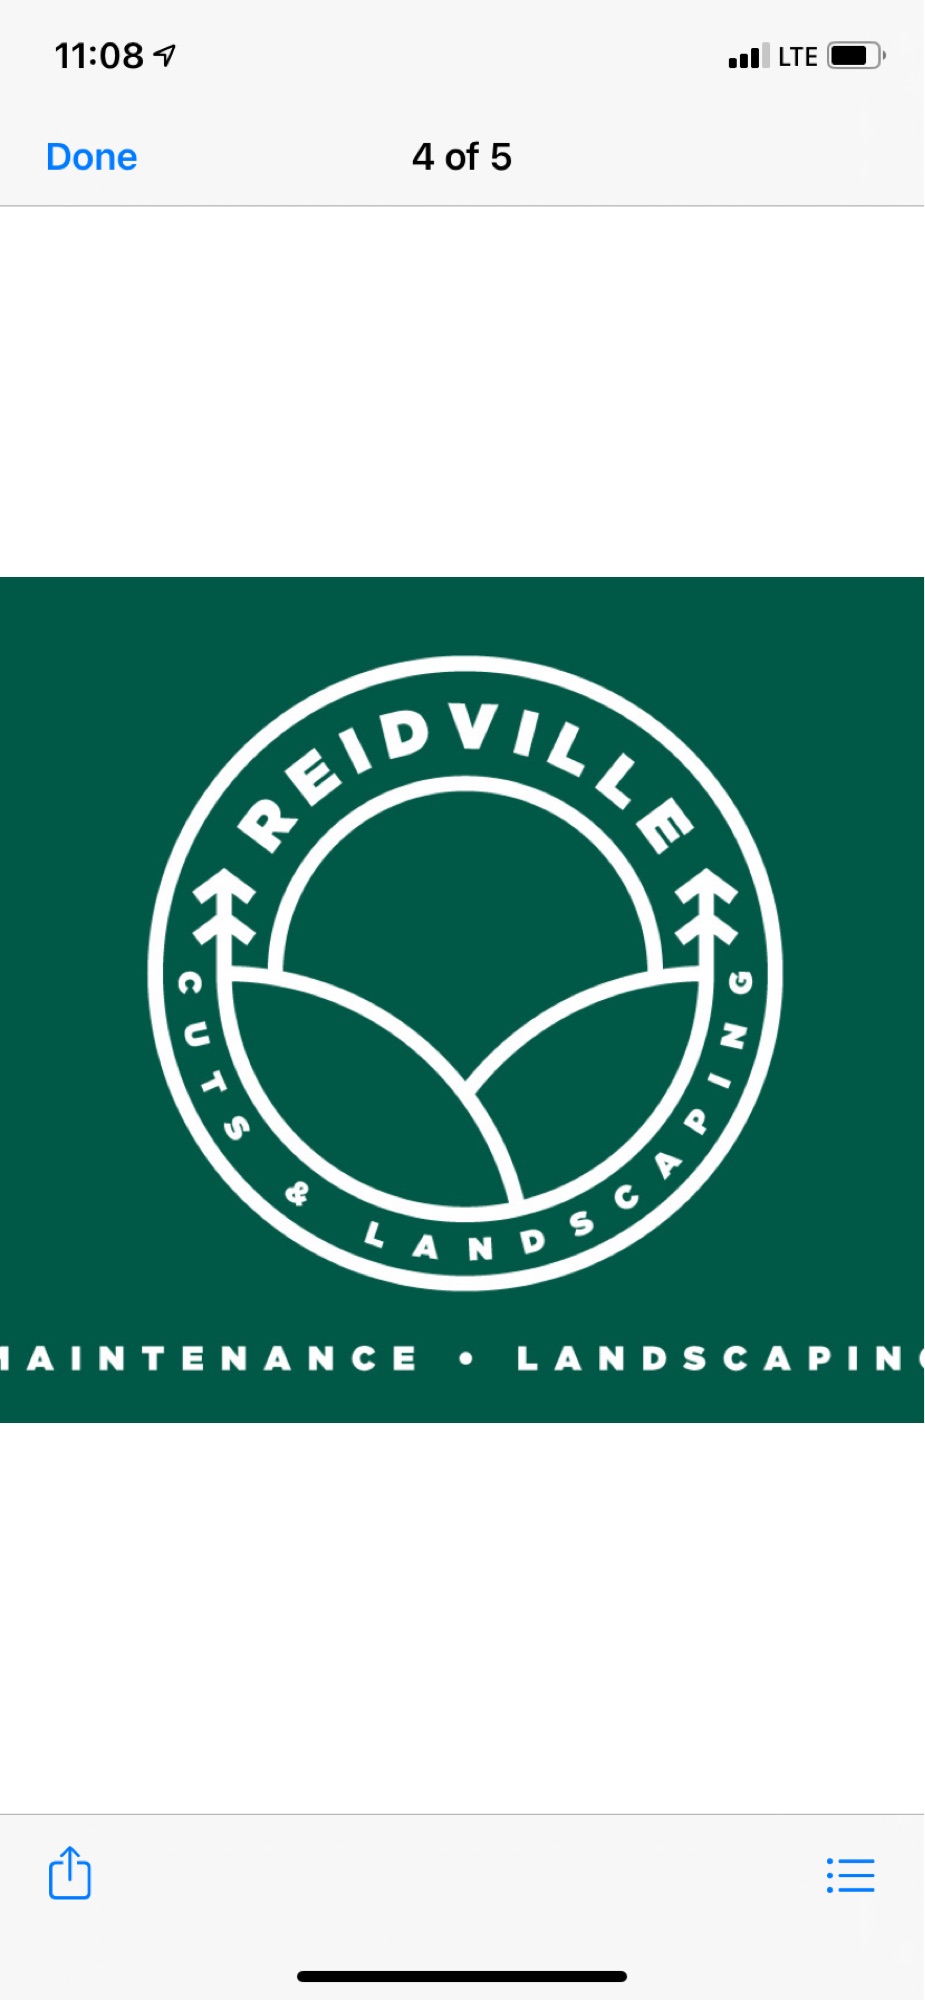 Reidville Cuts & Landscaping Logo